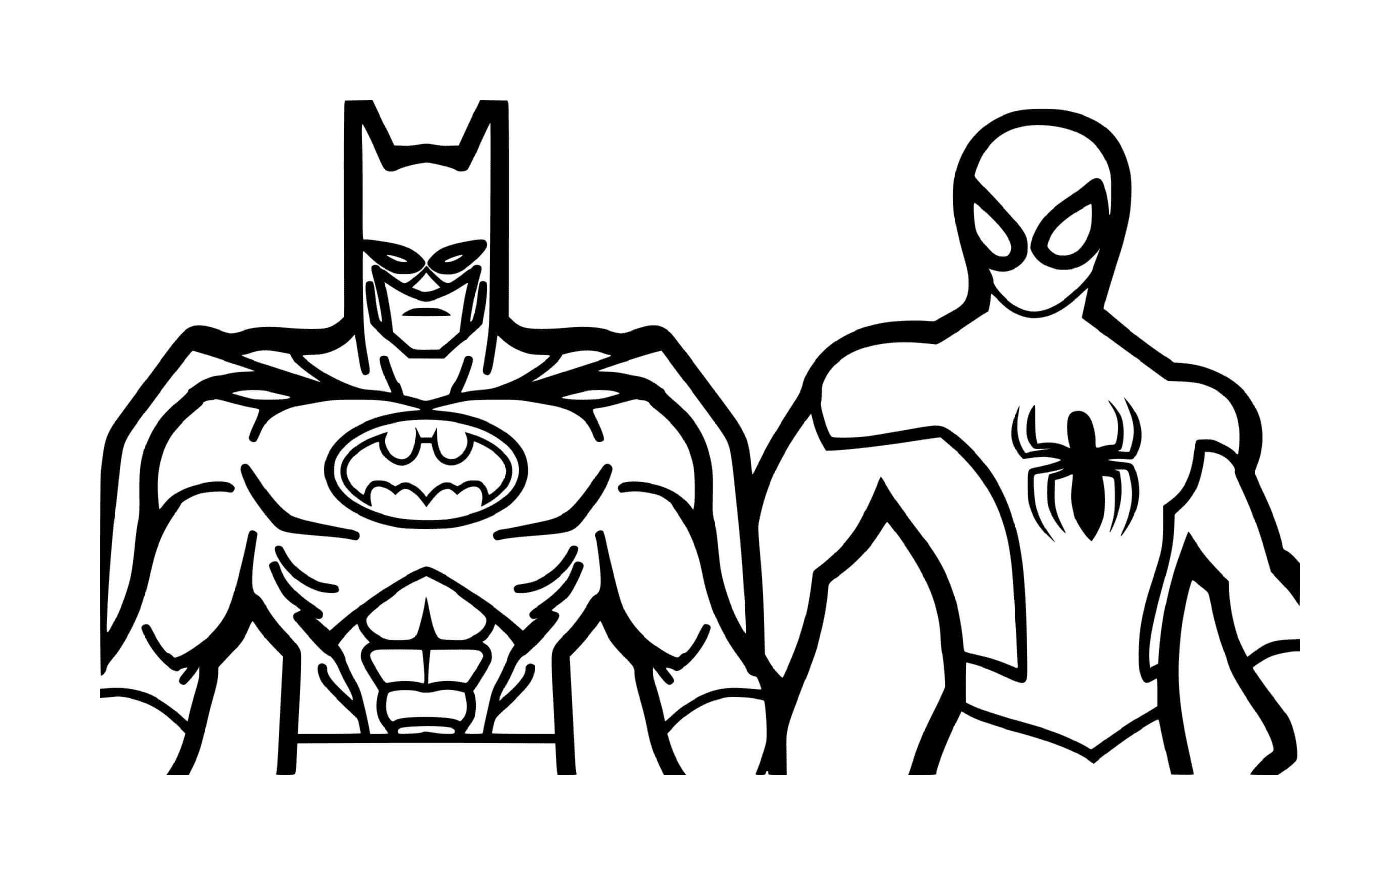  Batman and Spiderman, superheroes 